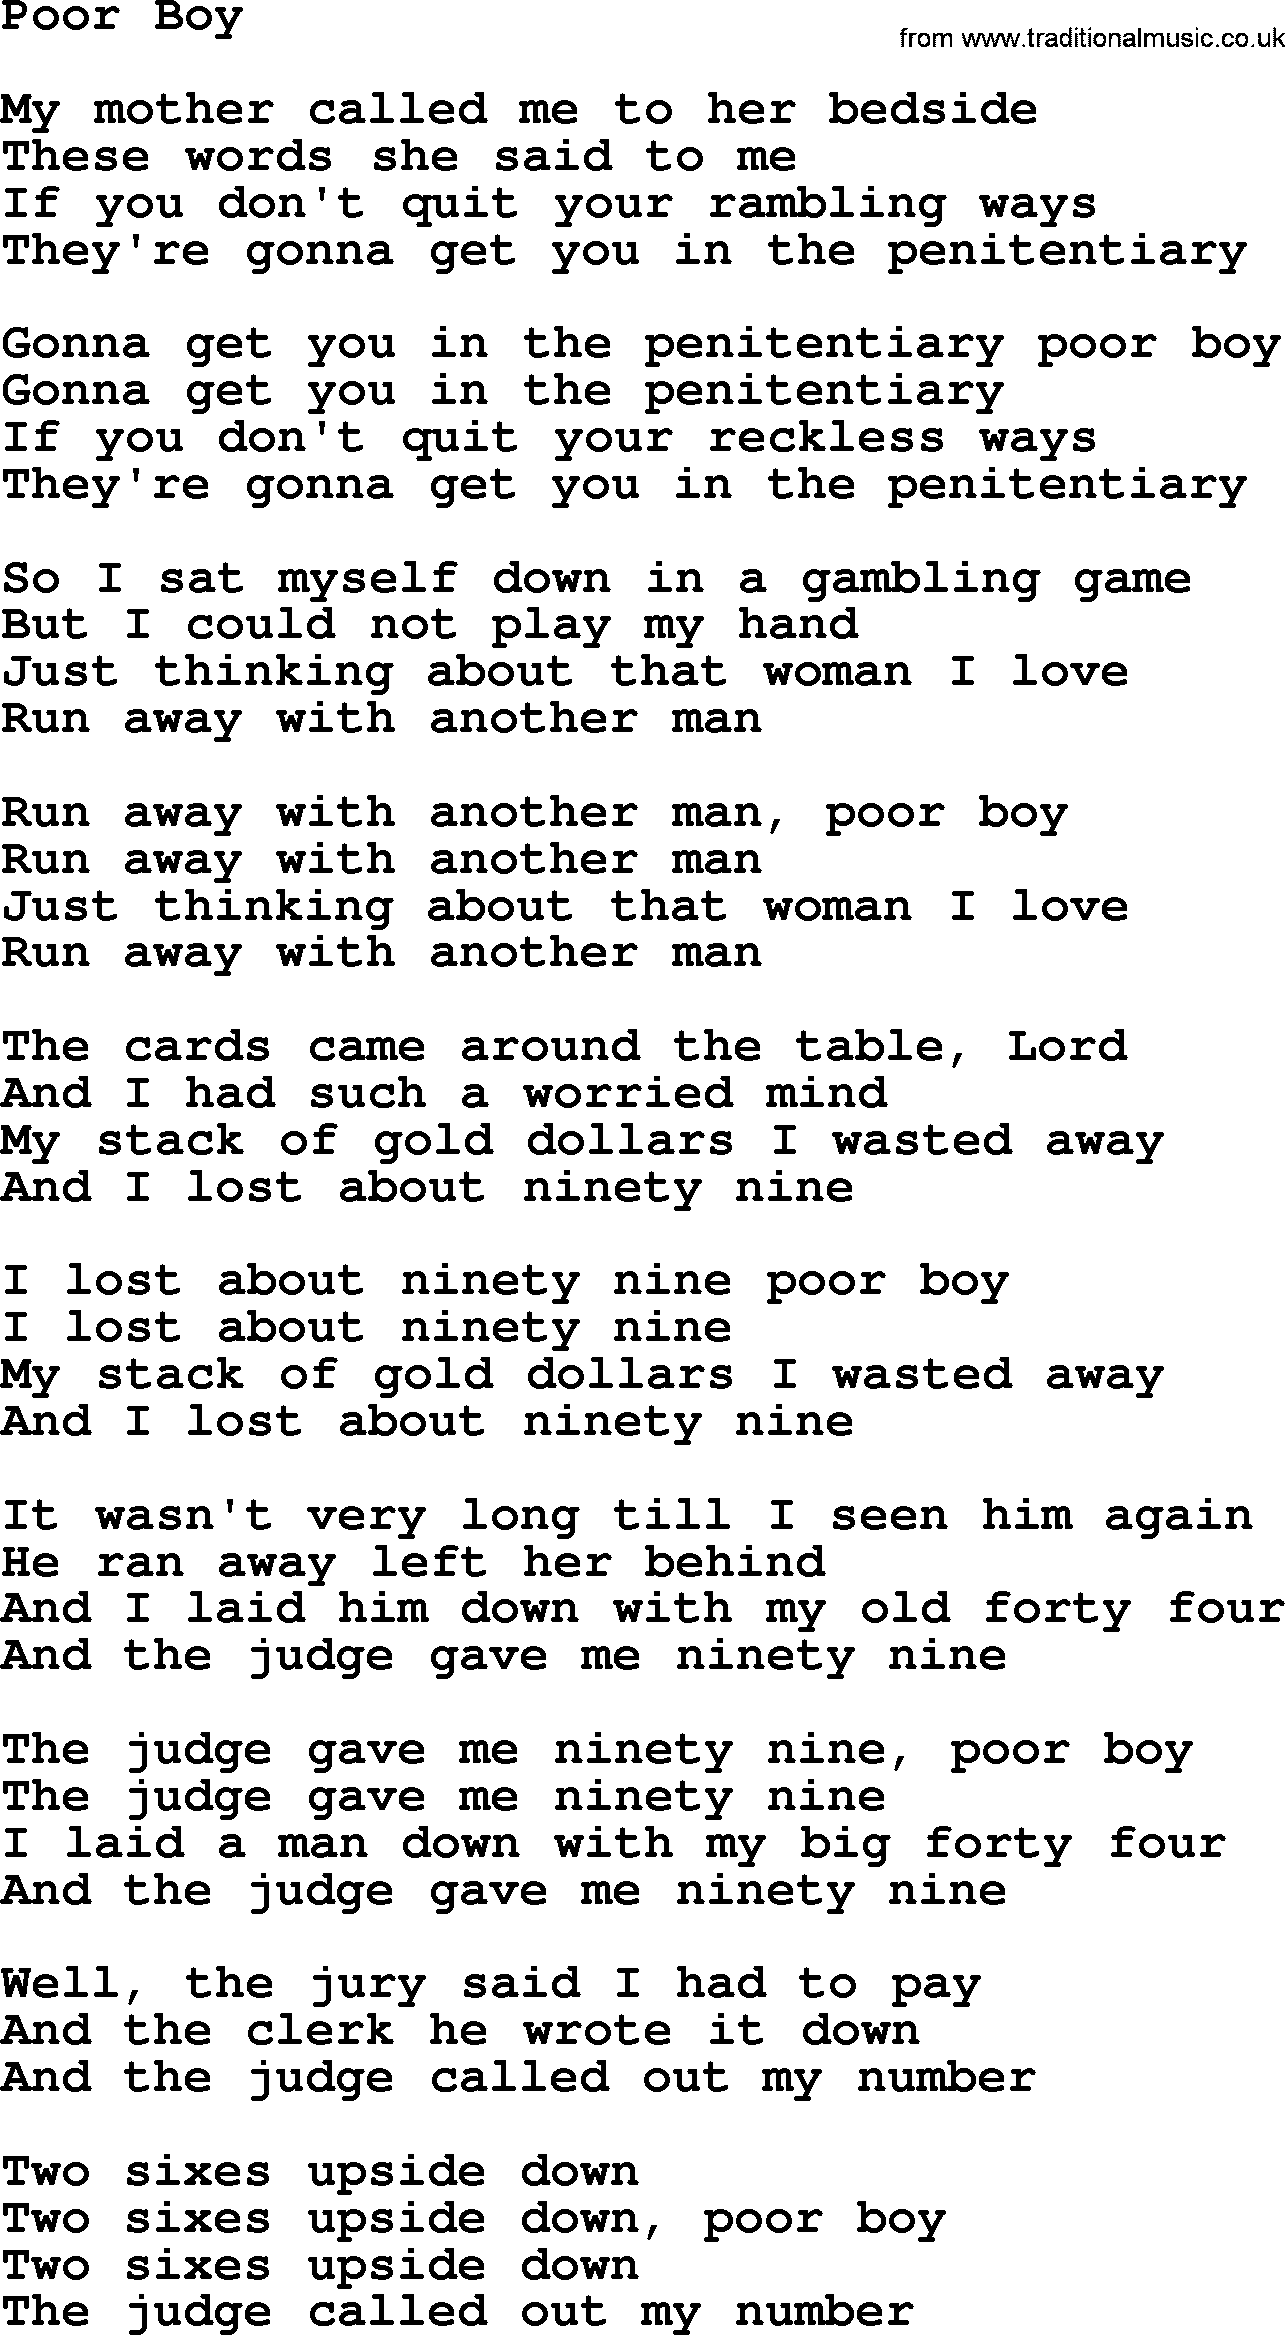 Woody Guthrie song Poor Boy lyrics